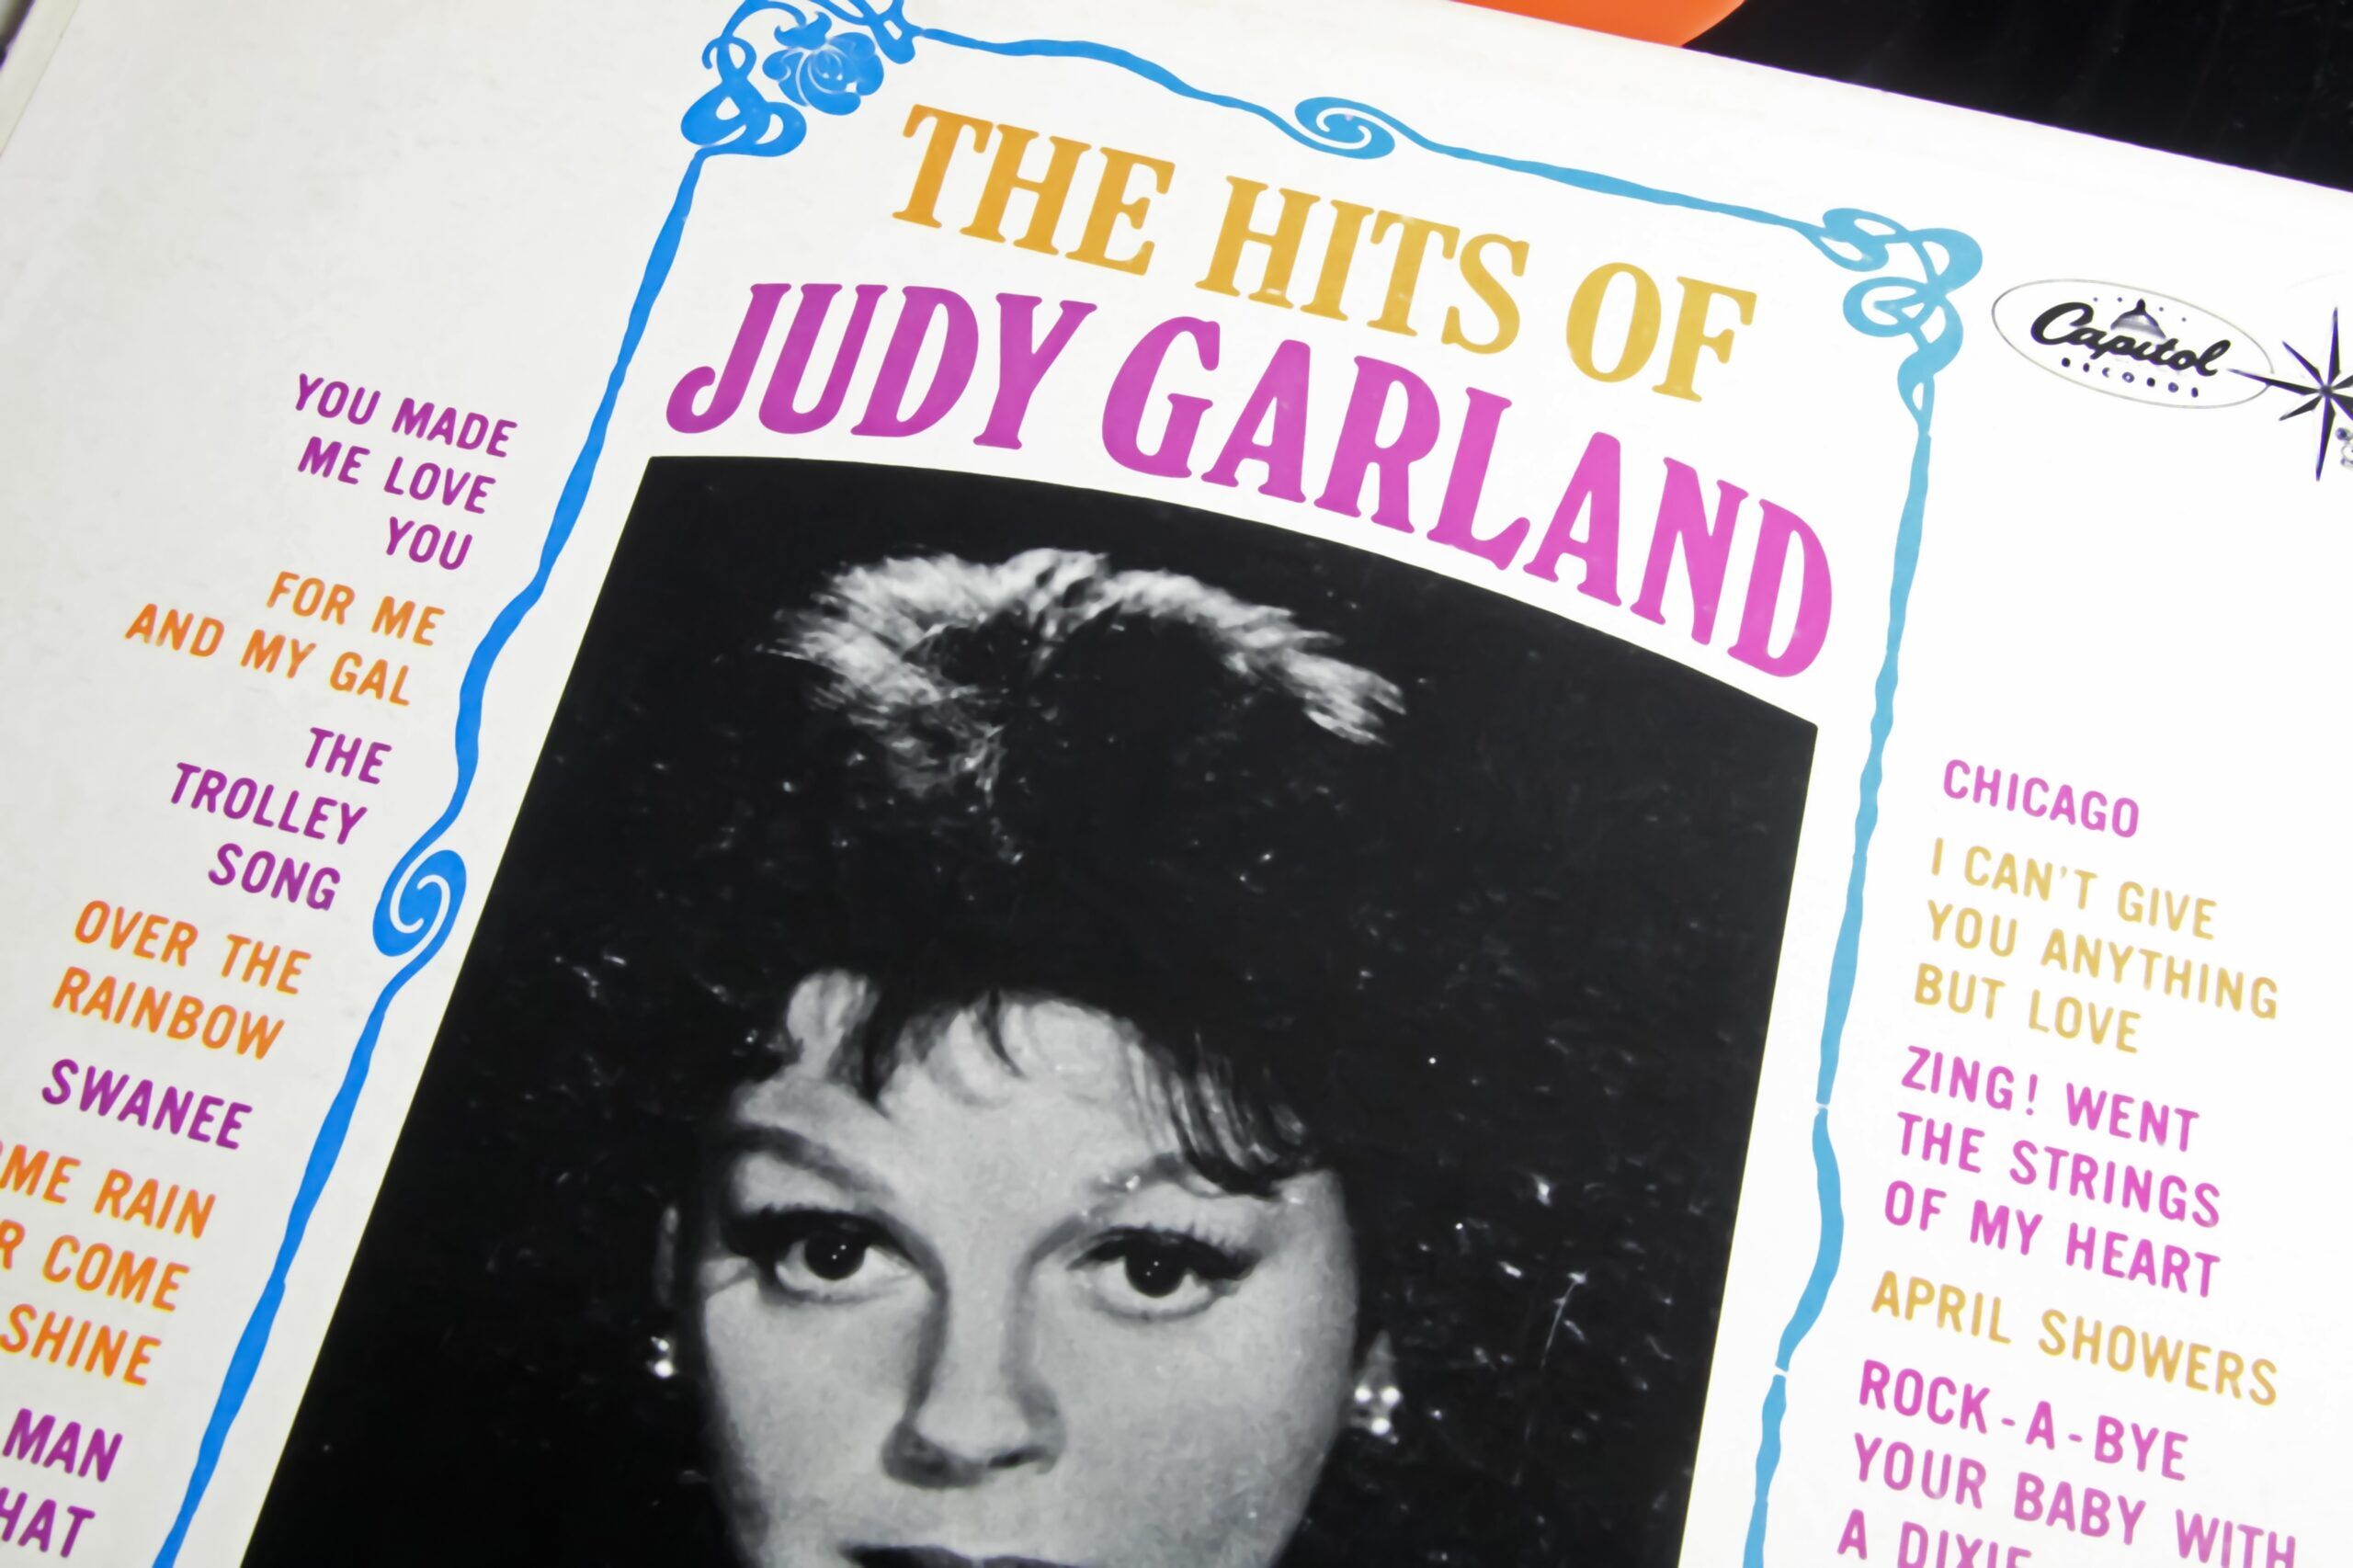 Viersen, Germany - May 9. 2022: Closeup of vinyl record cover of singer Judy Garland